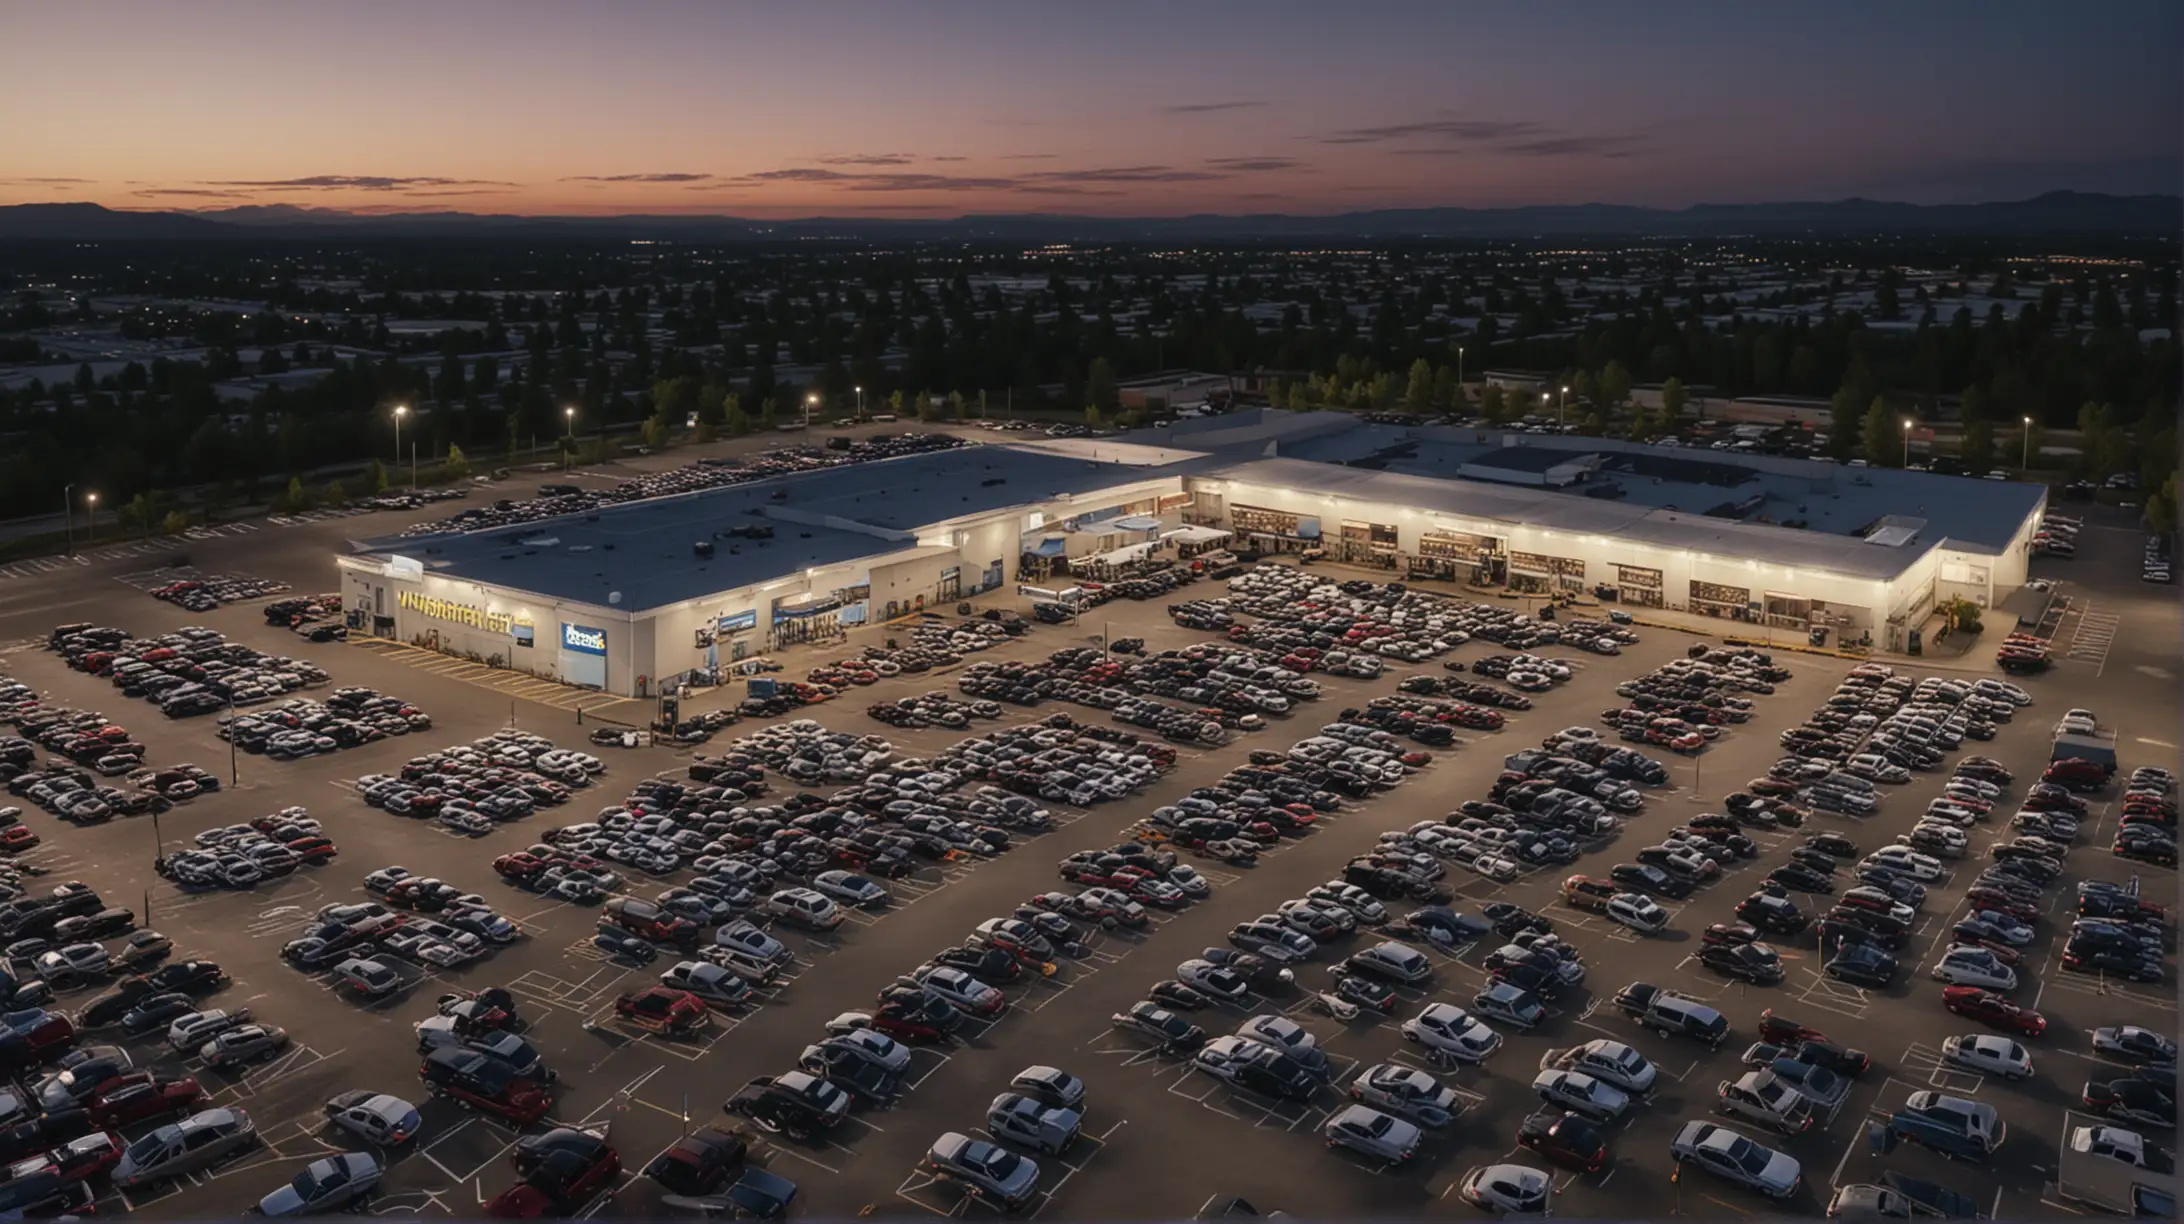 Dusk DriveIn Cinema Aerial View of Vibrant Walmart Parking Lot